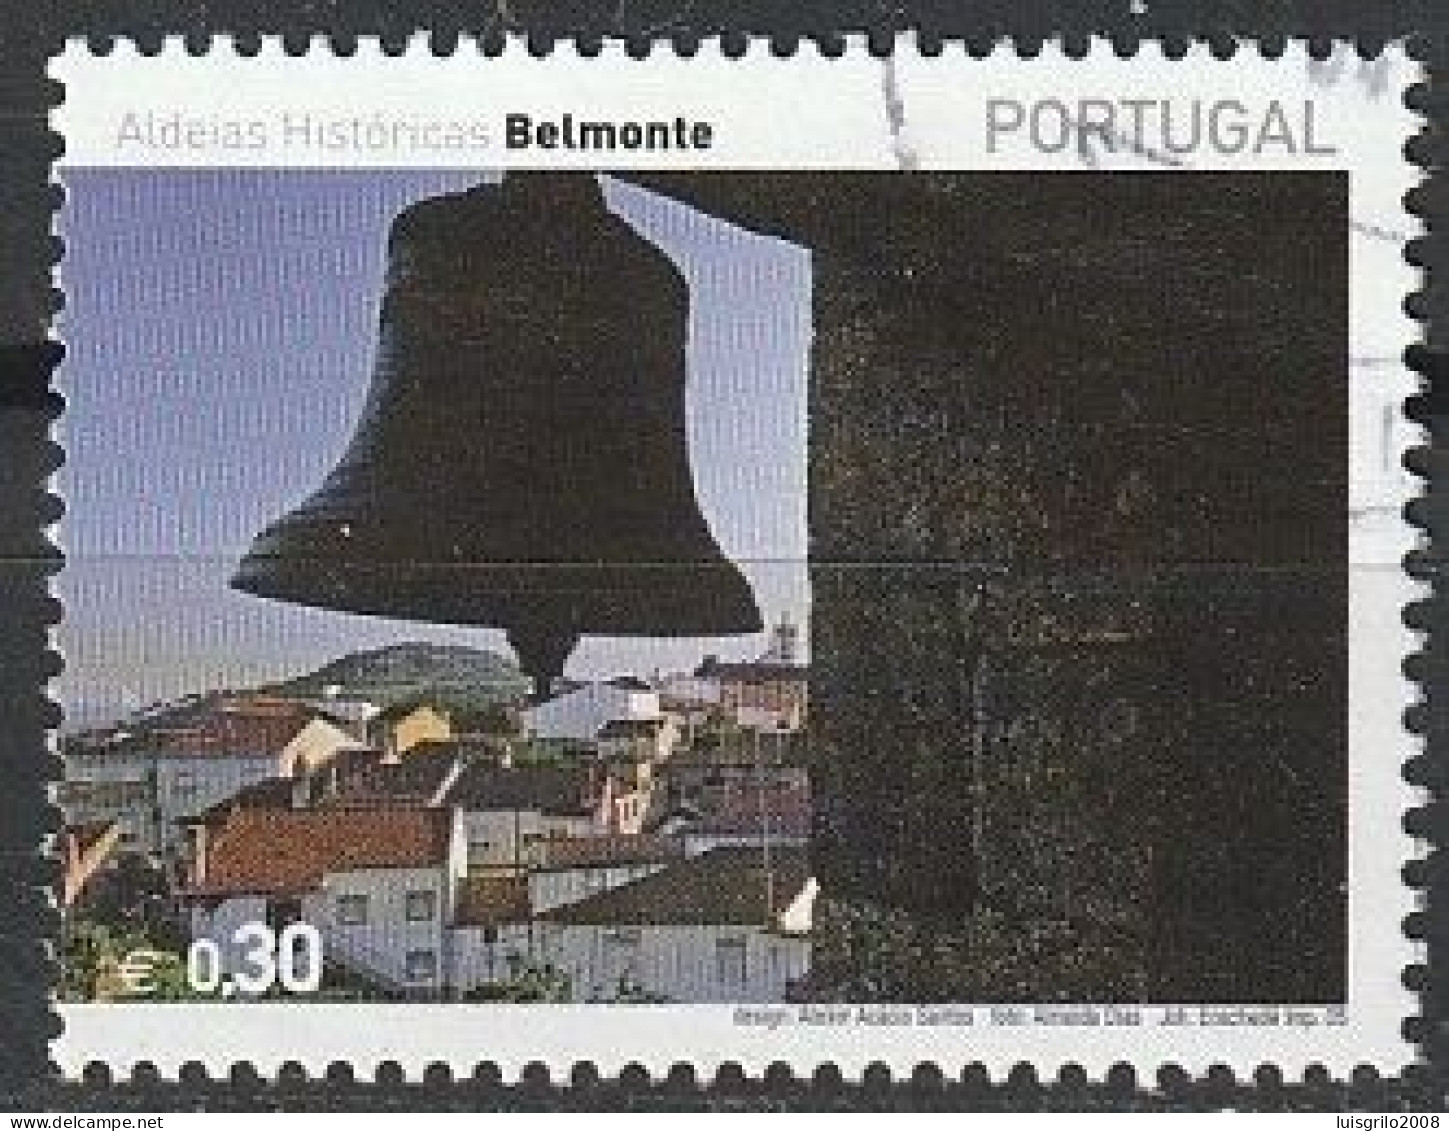 Portugal, 2005 - Aldeias Históricas, €0,30 -|- Mundifil - 3220 - Used Stamps